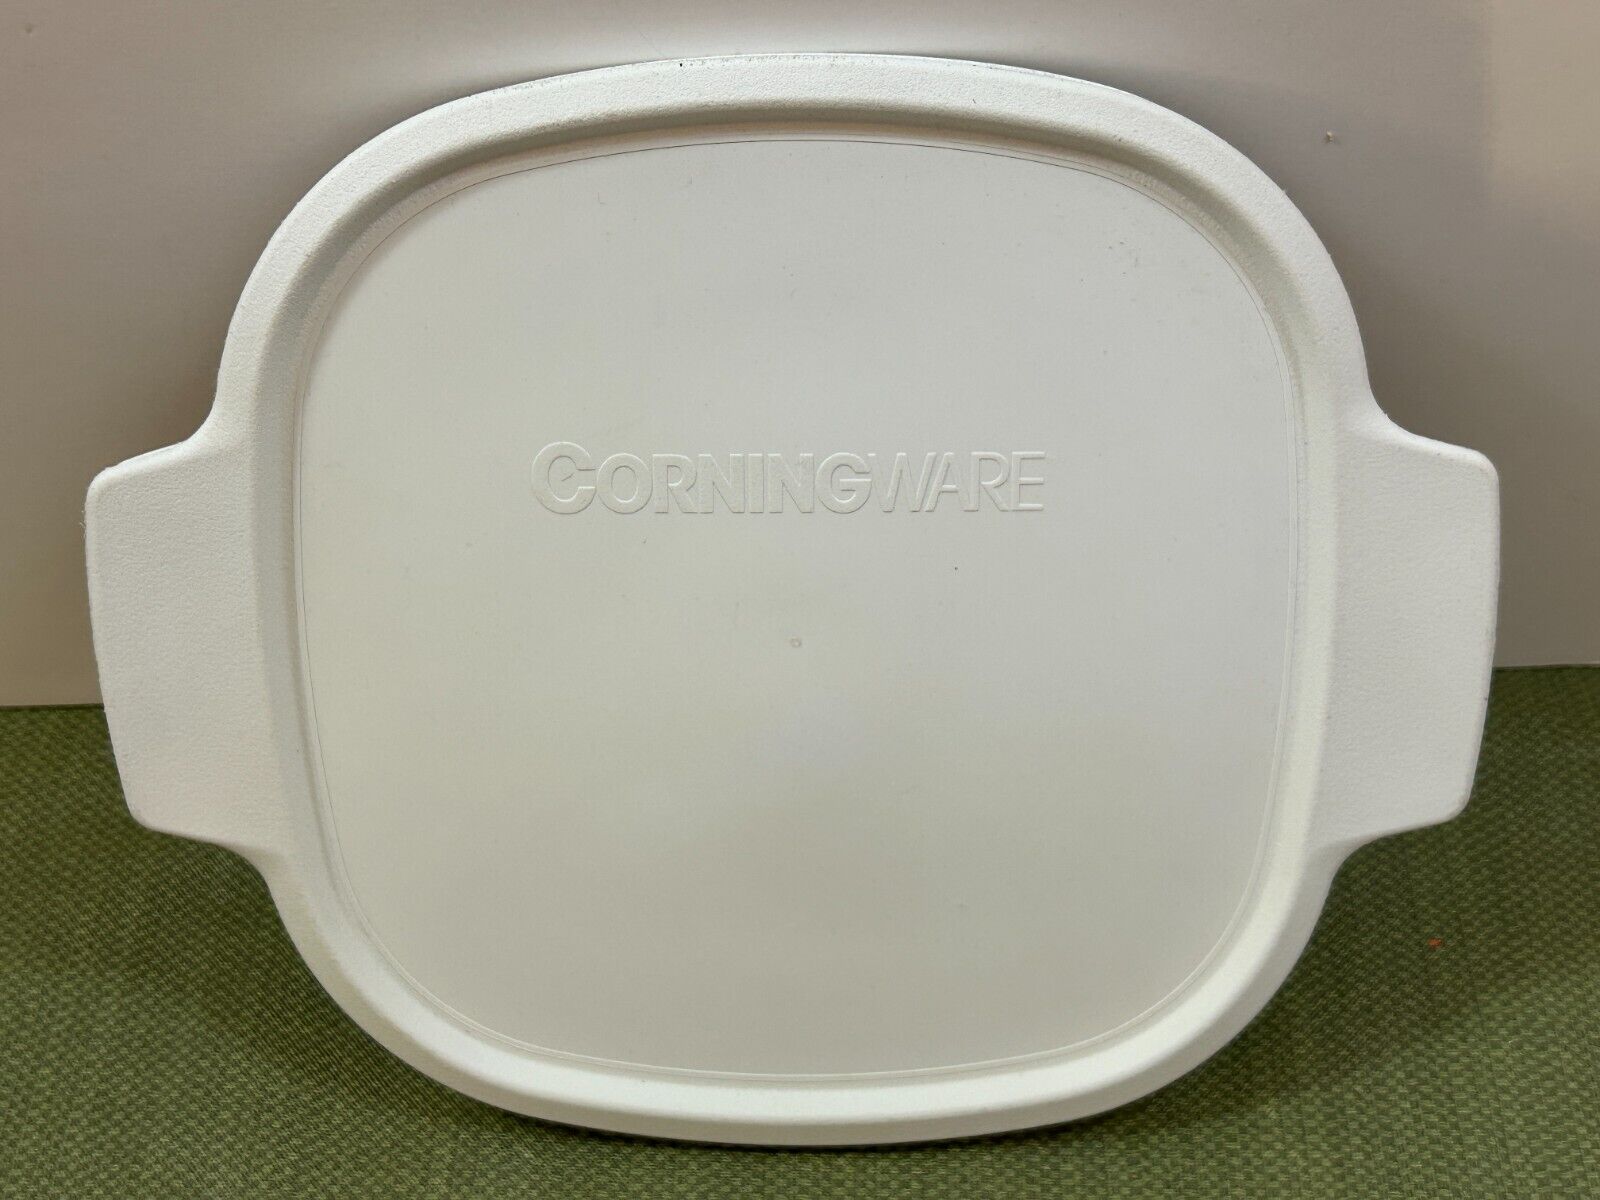 Corningware Casserole Dish Replacement Lid - White - A-2-PC USA